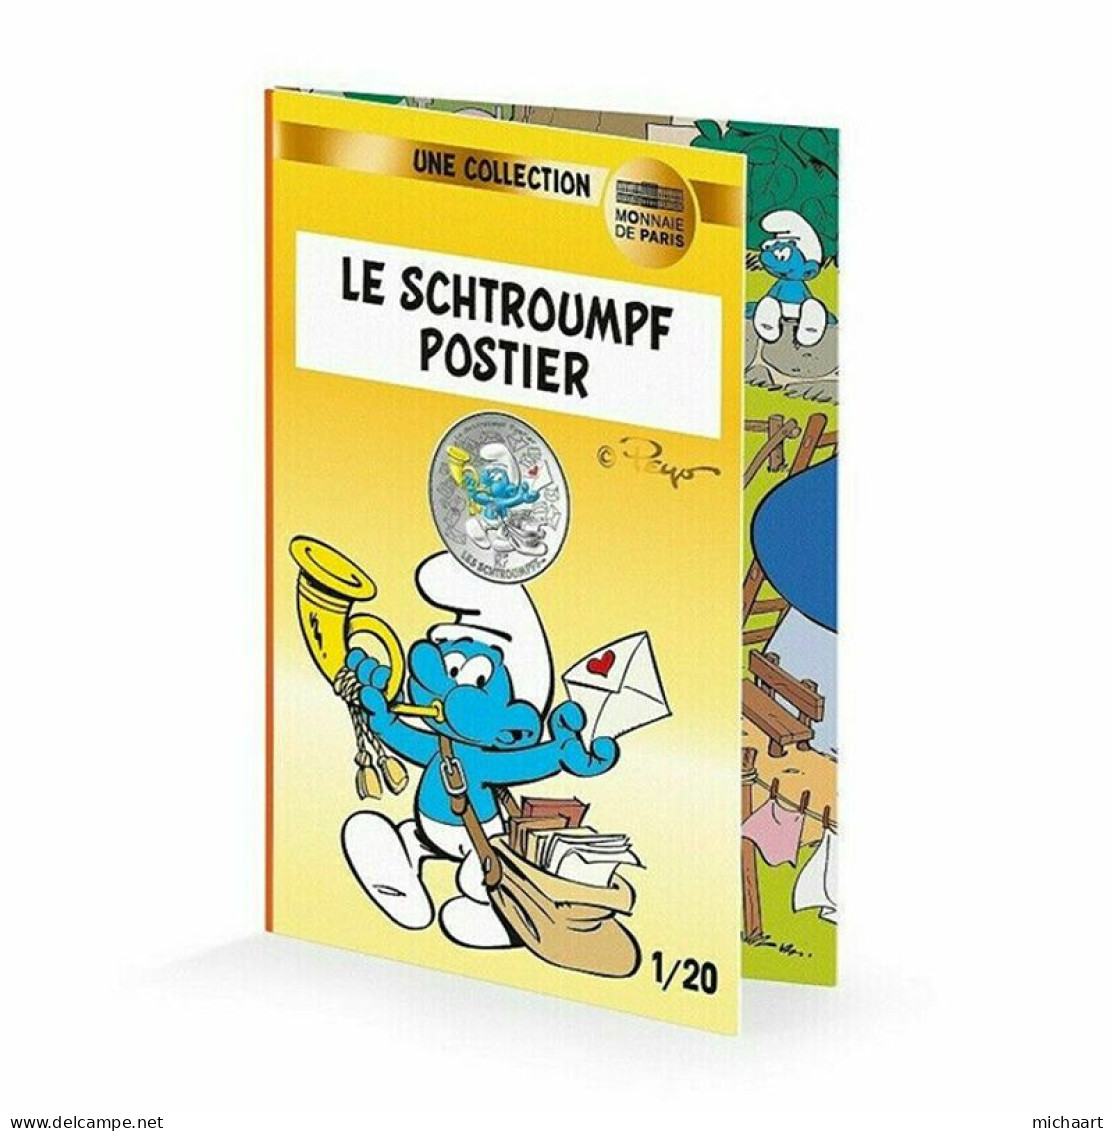 France 10 Euro Silver 2020 Postman The Smurfs Colored Coin Cartoon 00400 - Commémoratives